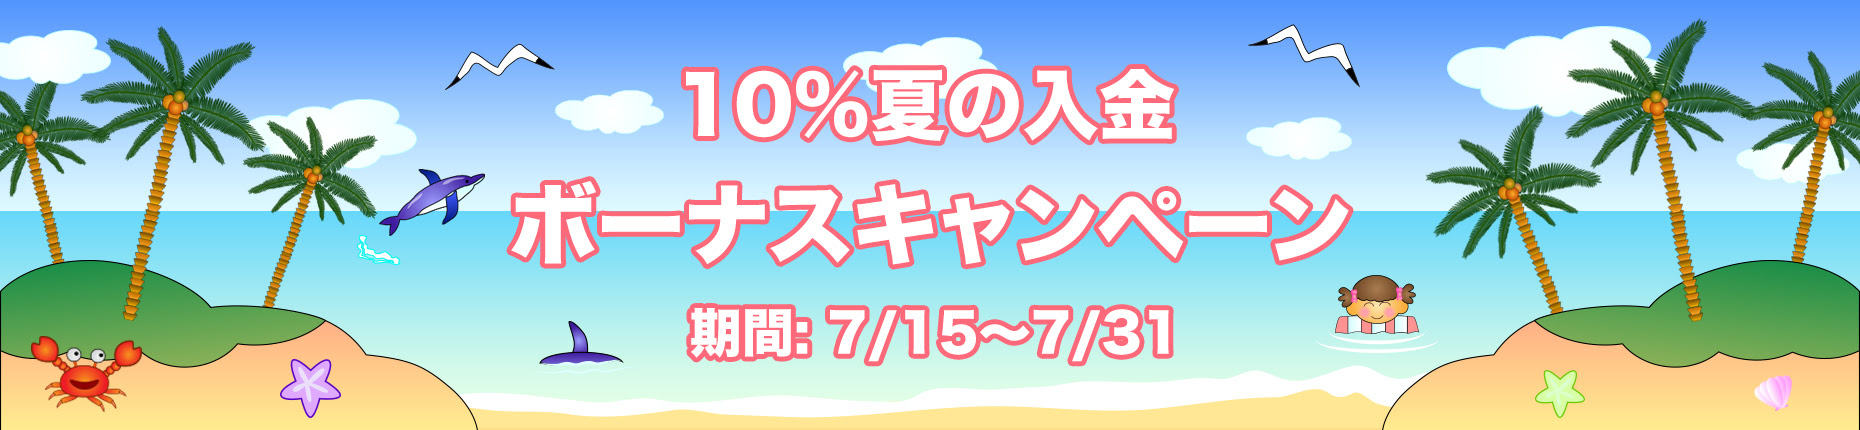 【FXDD】10%夏の入金ボーナスキャンペーン【延長中】